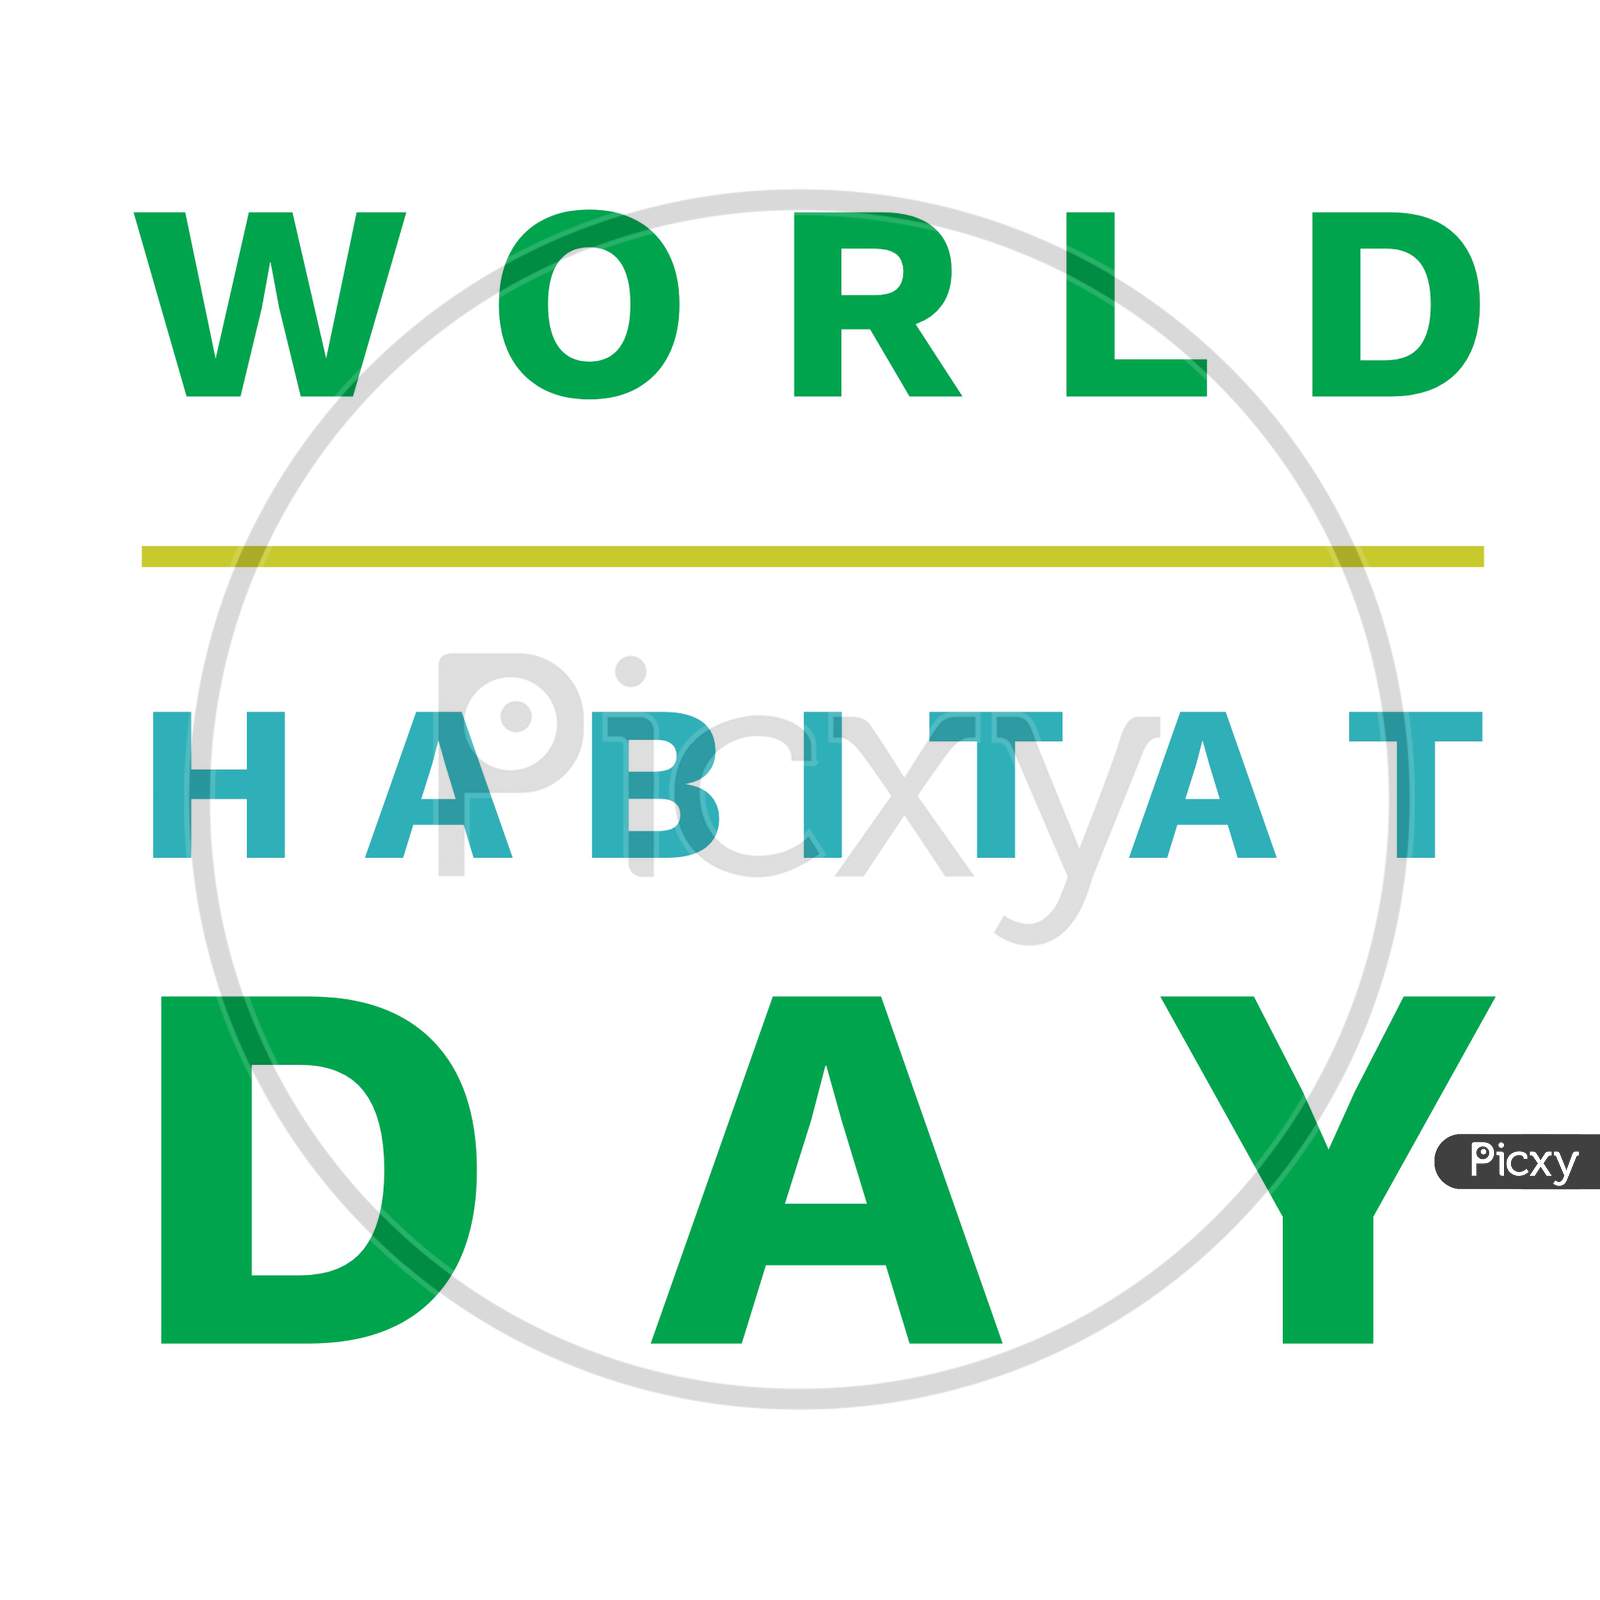 Image With Text "World Habitat Day" On White Background.